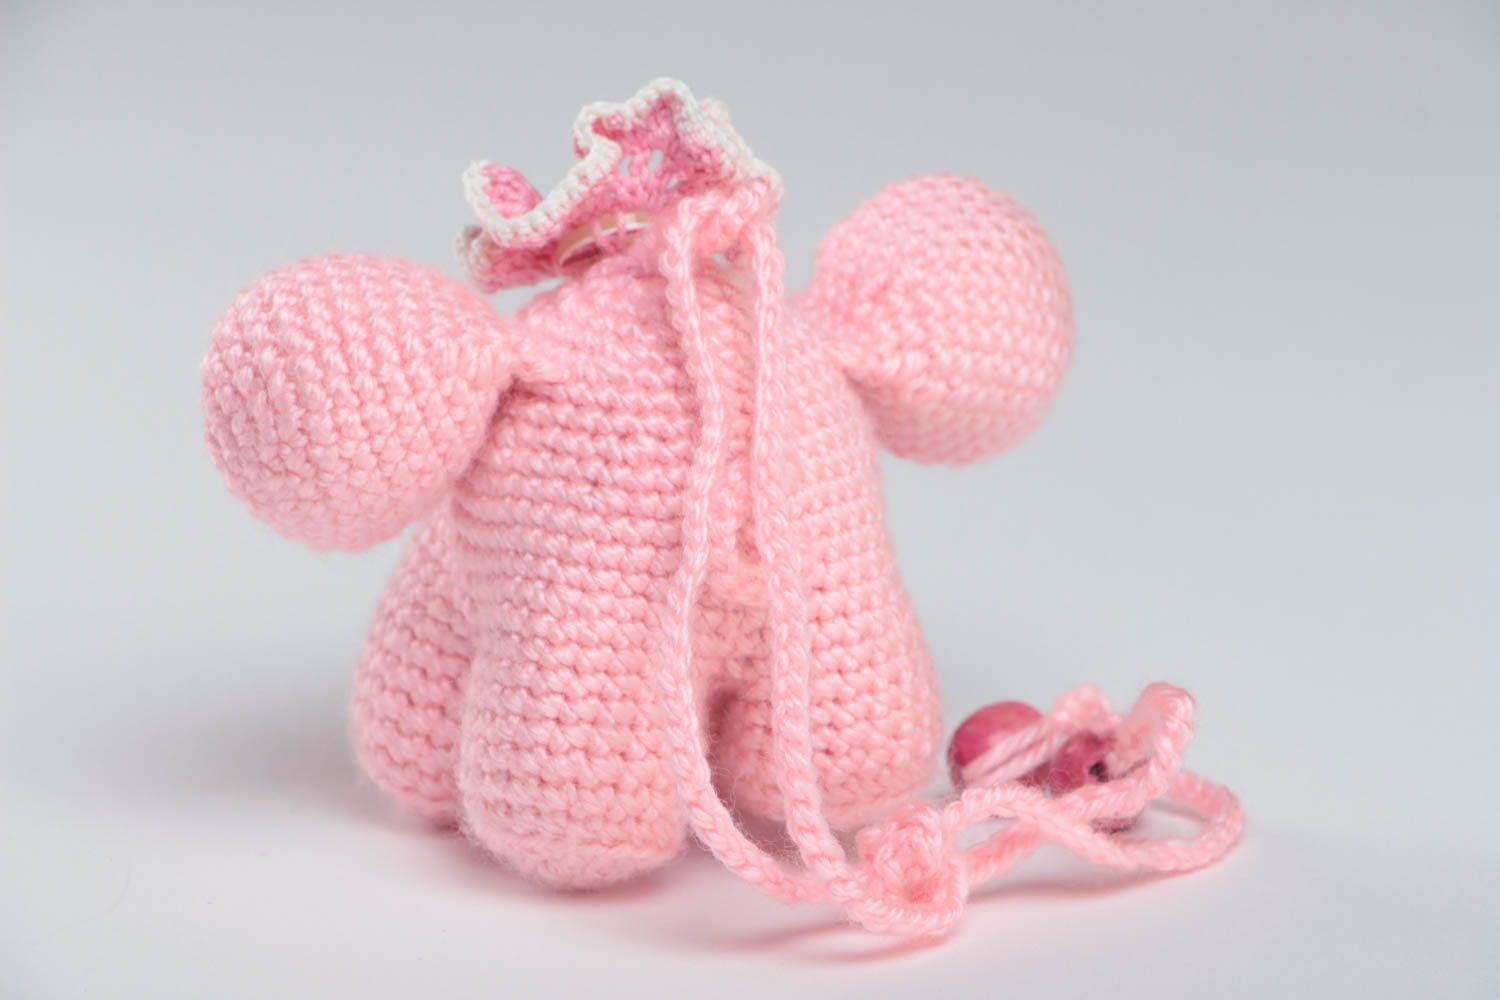 Soft crocheted toy pink elephant made of acrylic threads handmade interior decor photo 4